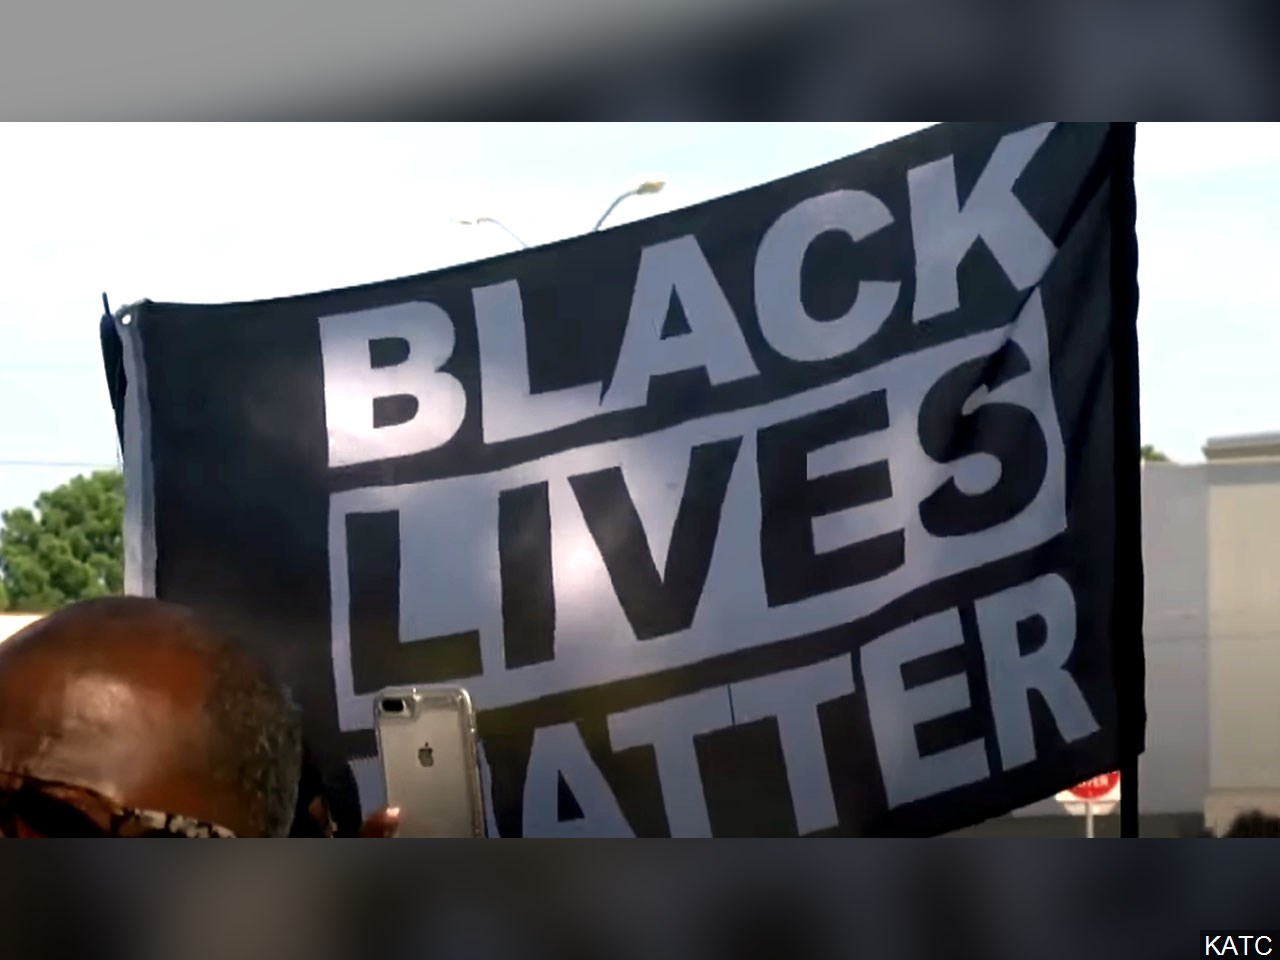 AP Exclusive: Black Lives Matter opens up about its finances